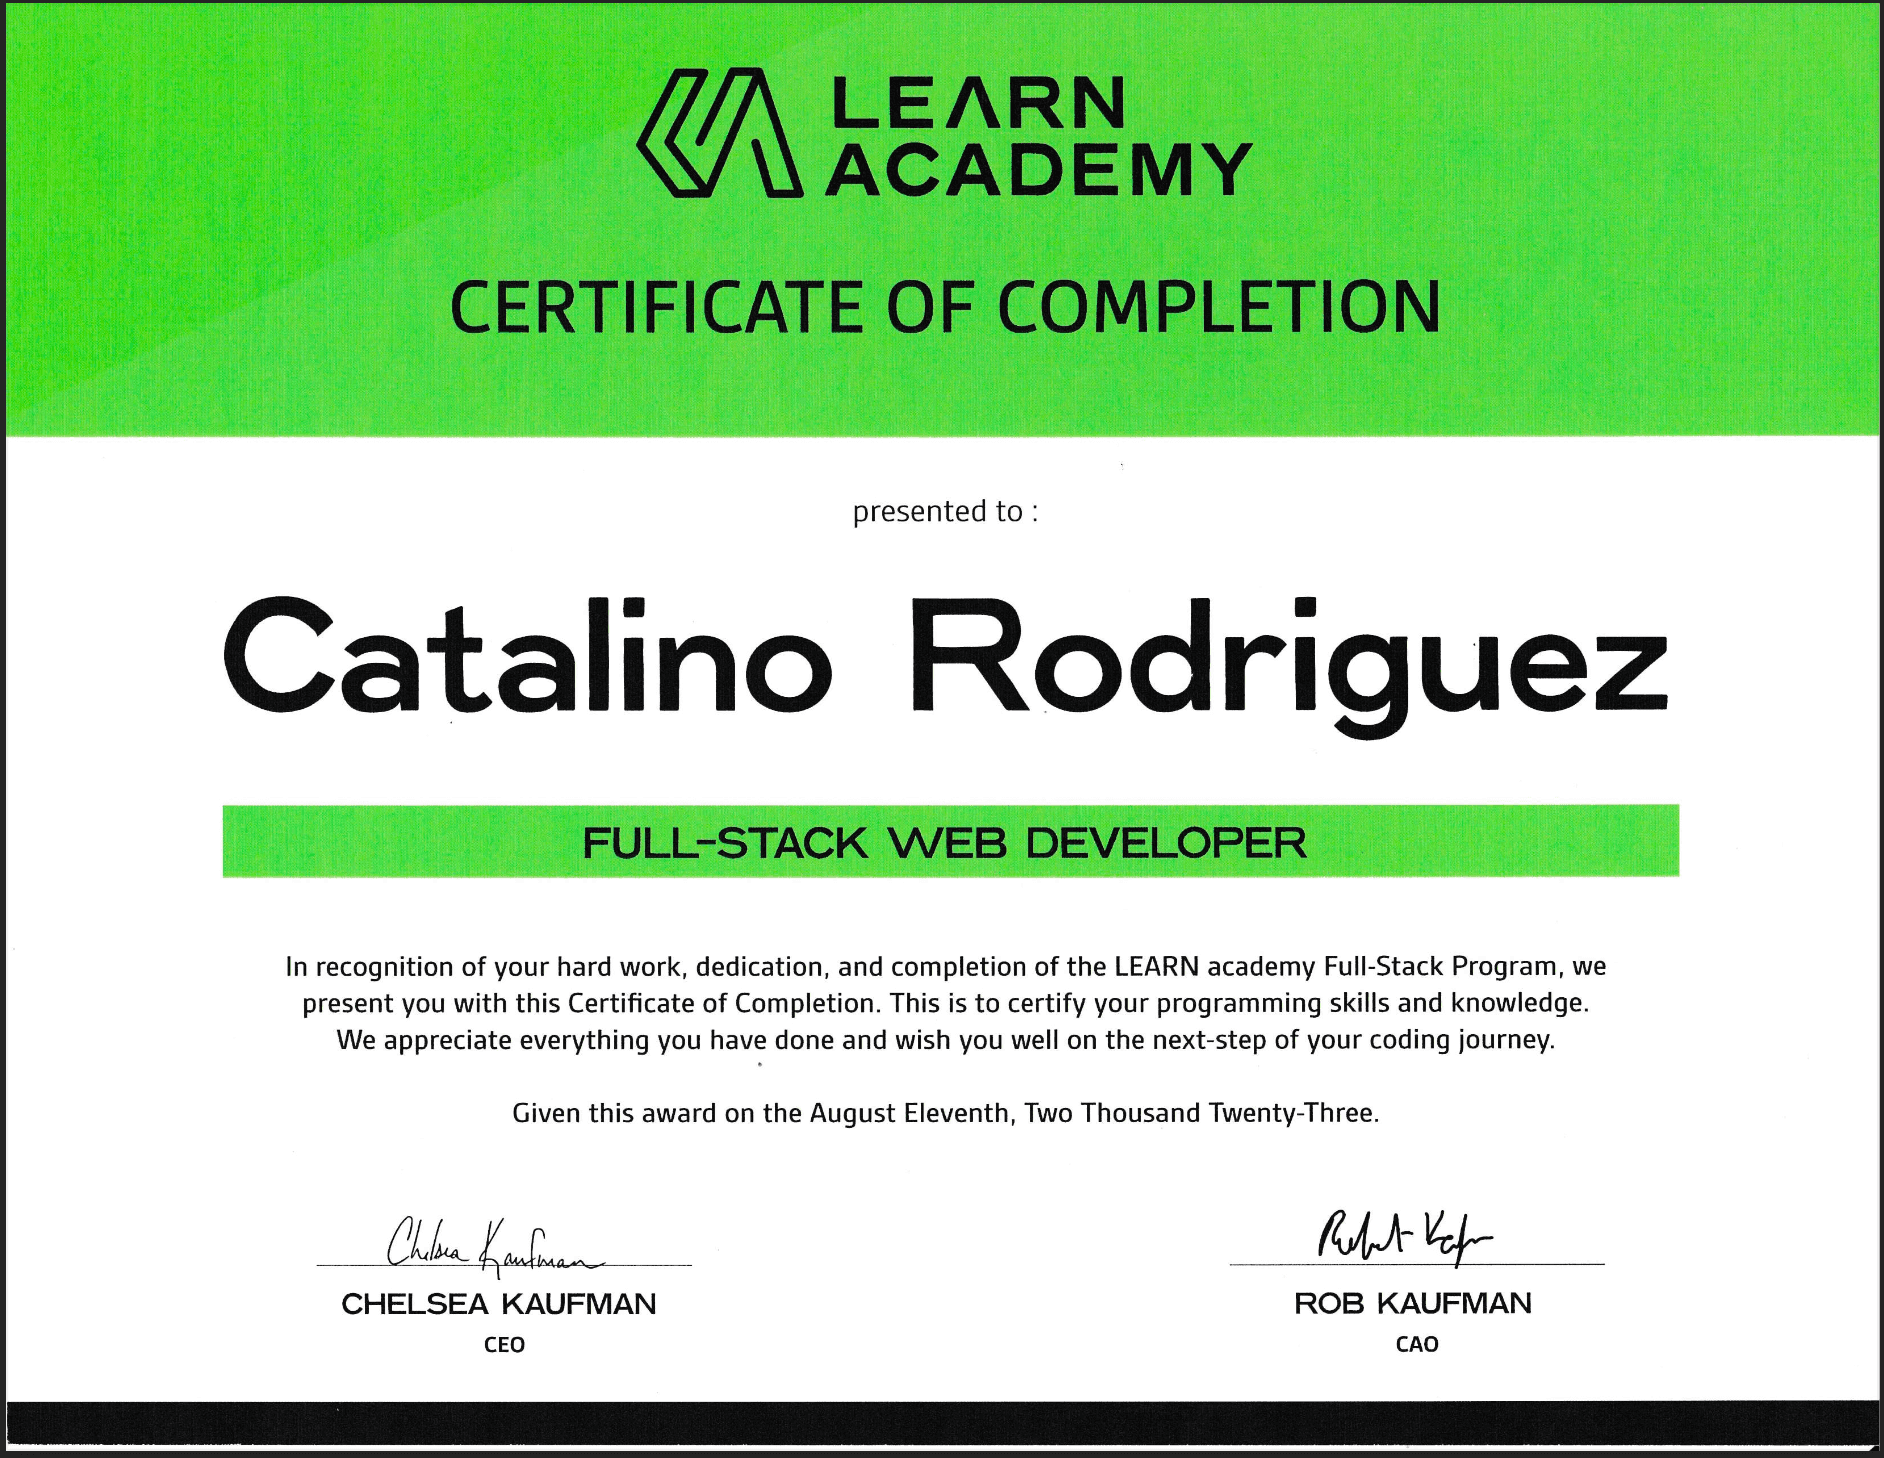 LEARN Academy Certificate